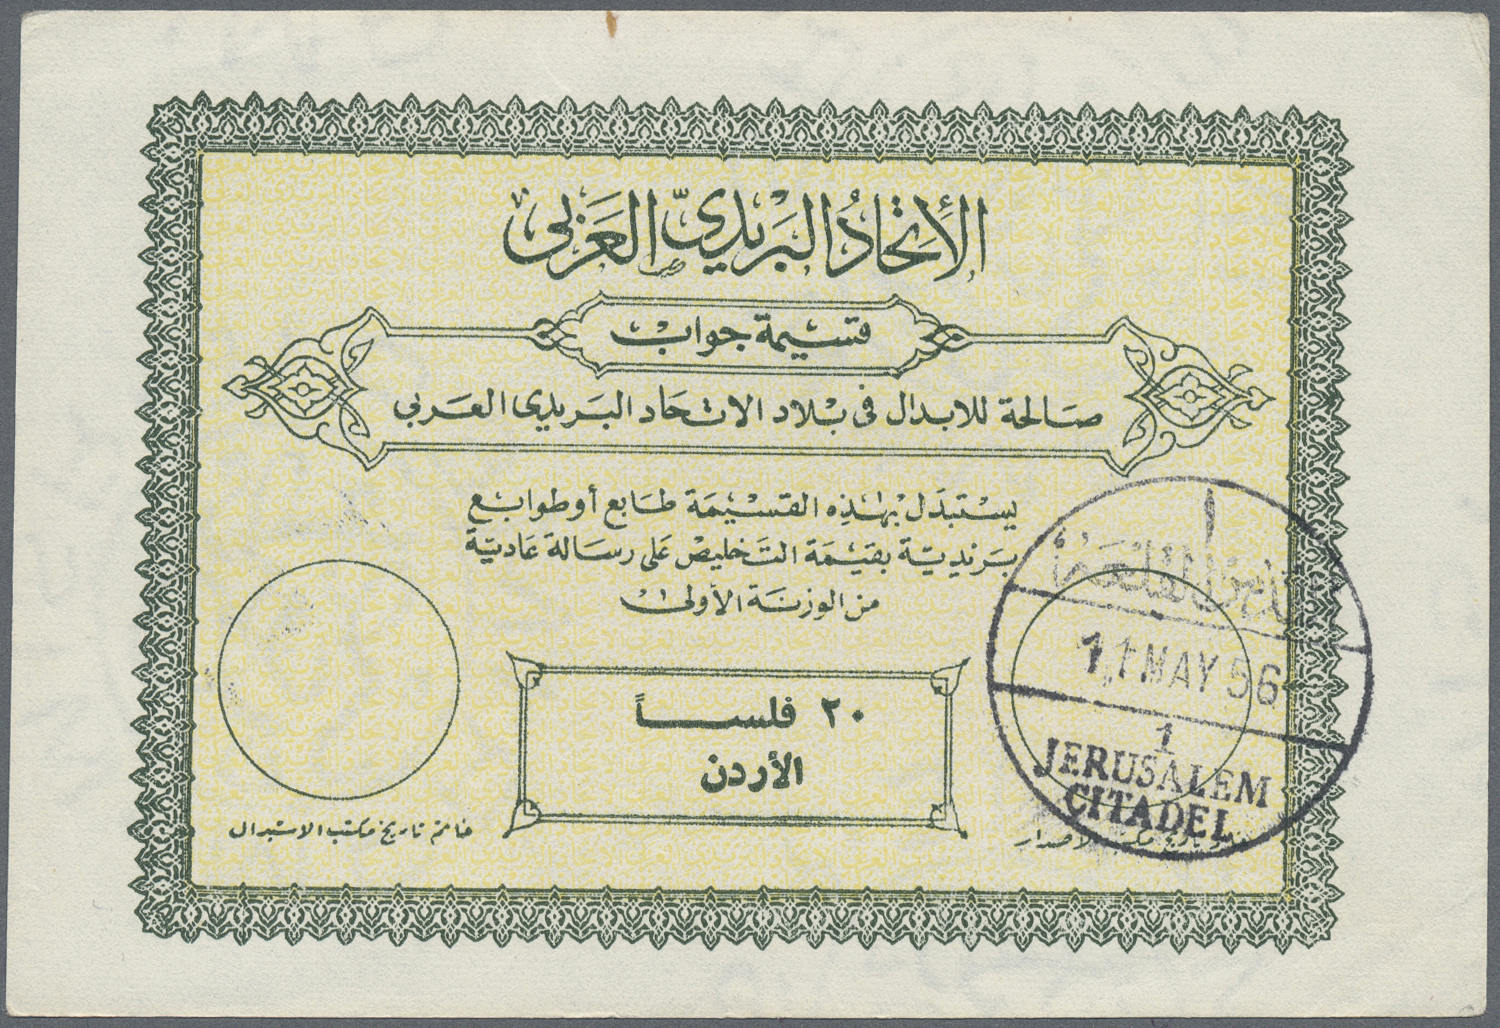 Br Palästina: 1956, 20fils (APU) Jordan Postal Exchange Order Cancelled "Jerusalem Citadel 11 May, 56", Plus Five Jerusa - Palestine